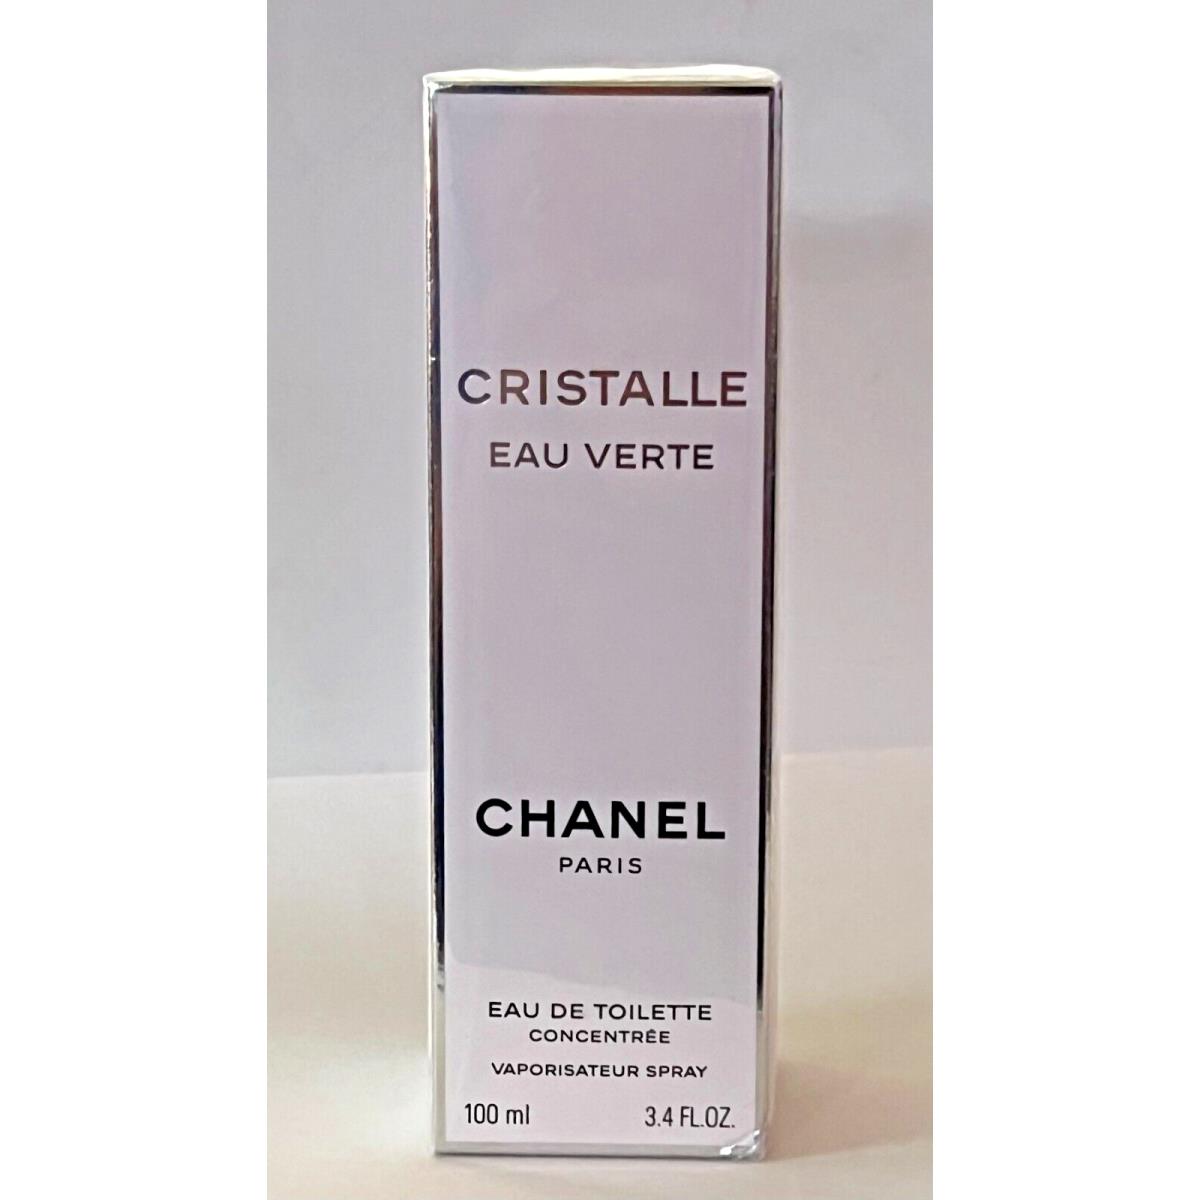 Cristalle Eau Verte By Chanel Perfume Women 3.4 oz Edt Concentree Spray  Rare - Chanel perfume,cologne,fragrance,parfum 